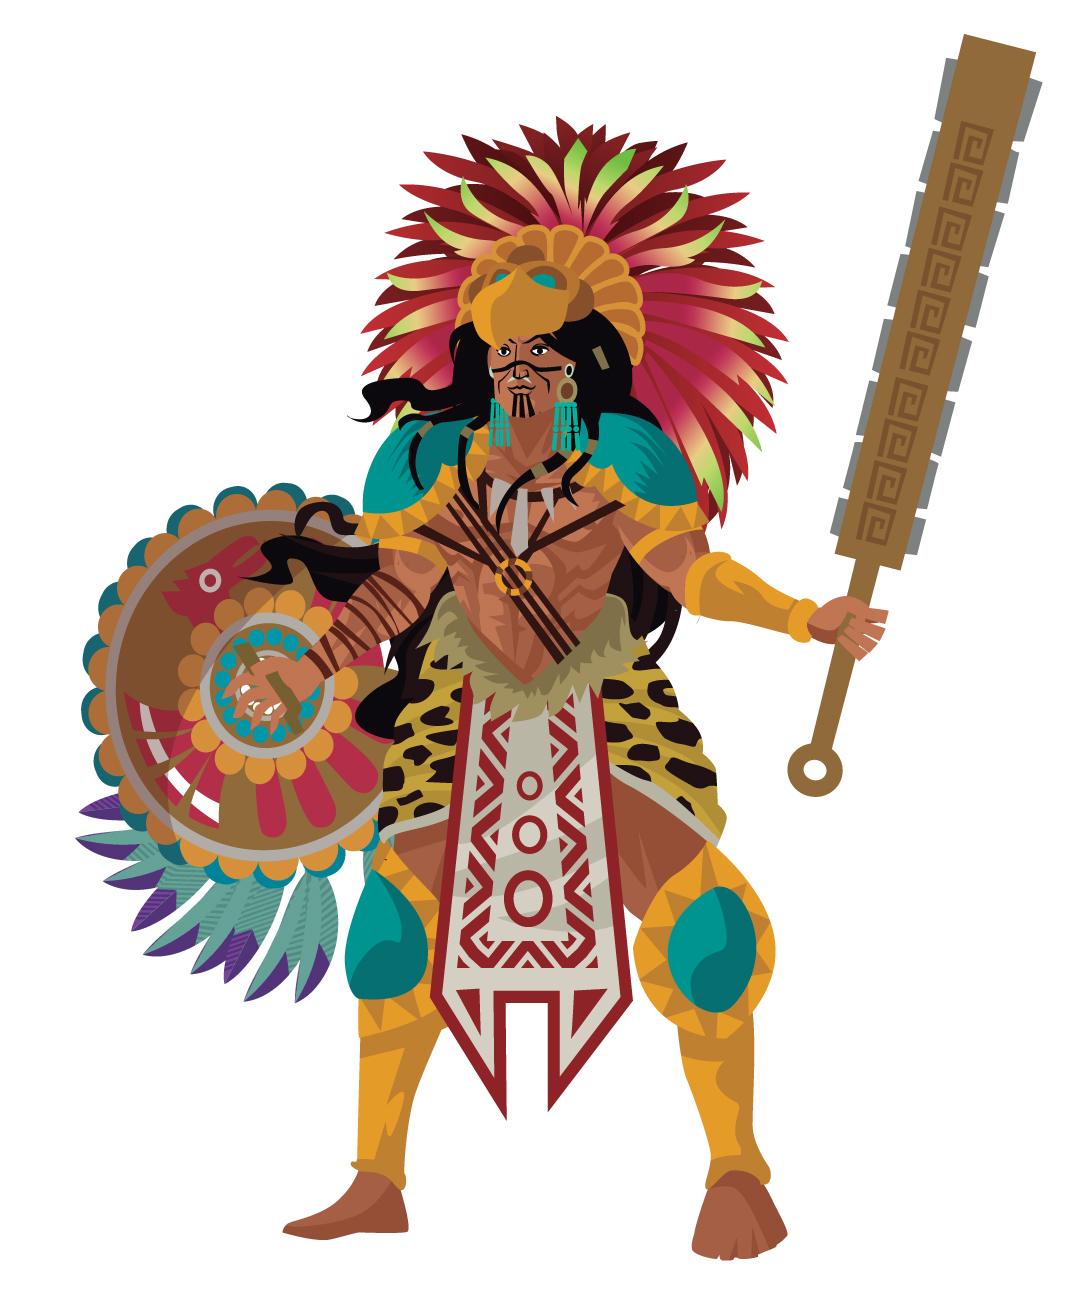 Illustration - Shutterstock | <a href="https://www.shutterstock.com/image-vector/aztec-strong-warrior-1107861776?studio=1">delcarmat</a>